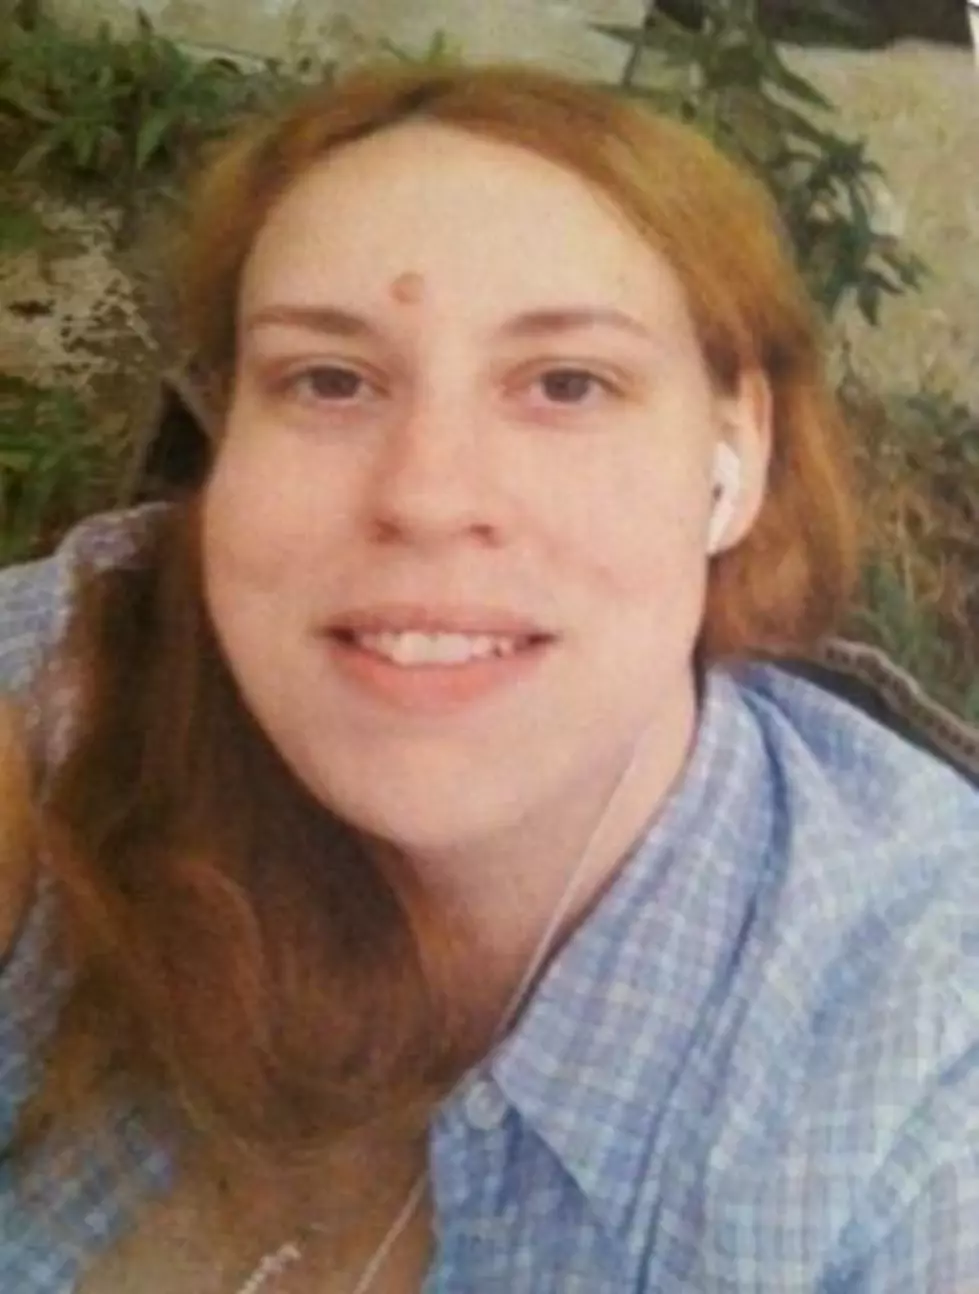 Missing Woman In Rensselaer County [UPDATE]